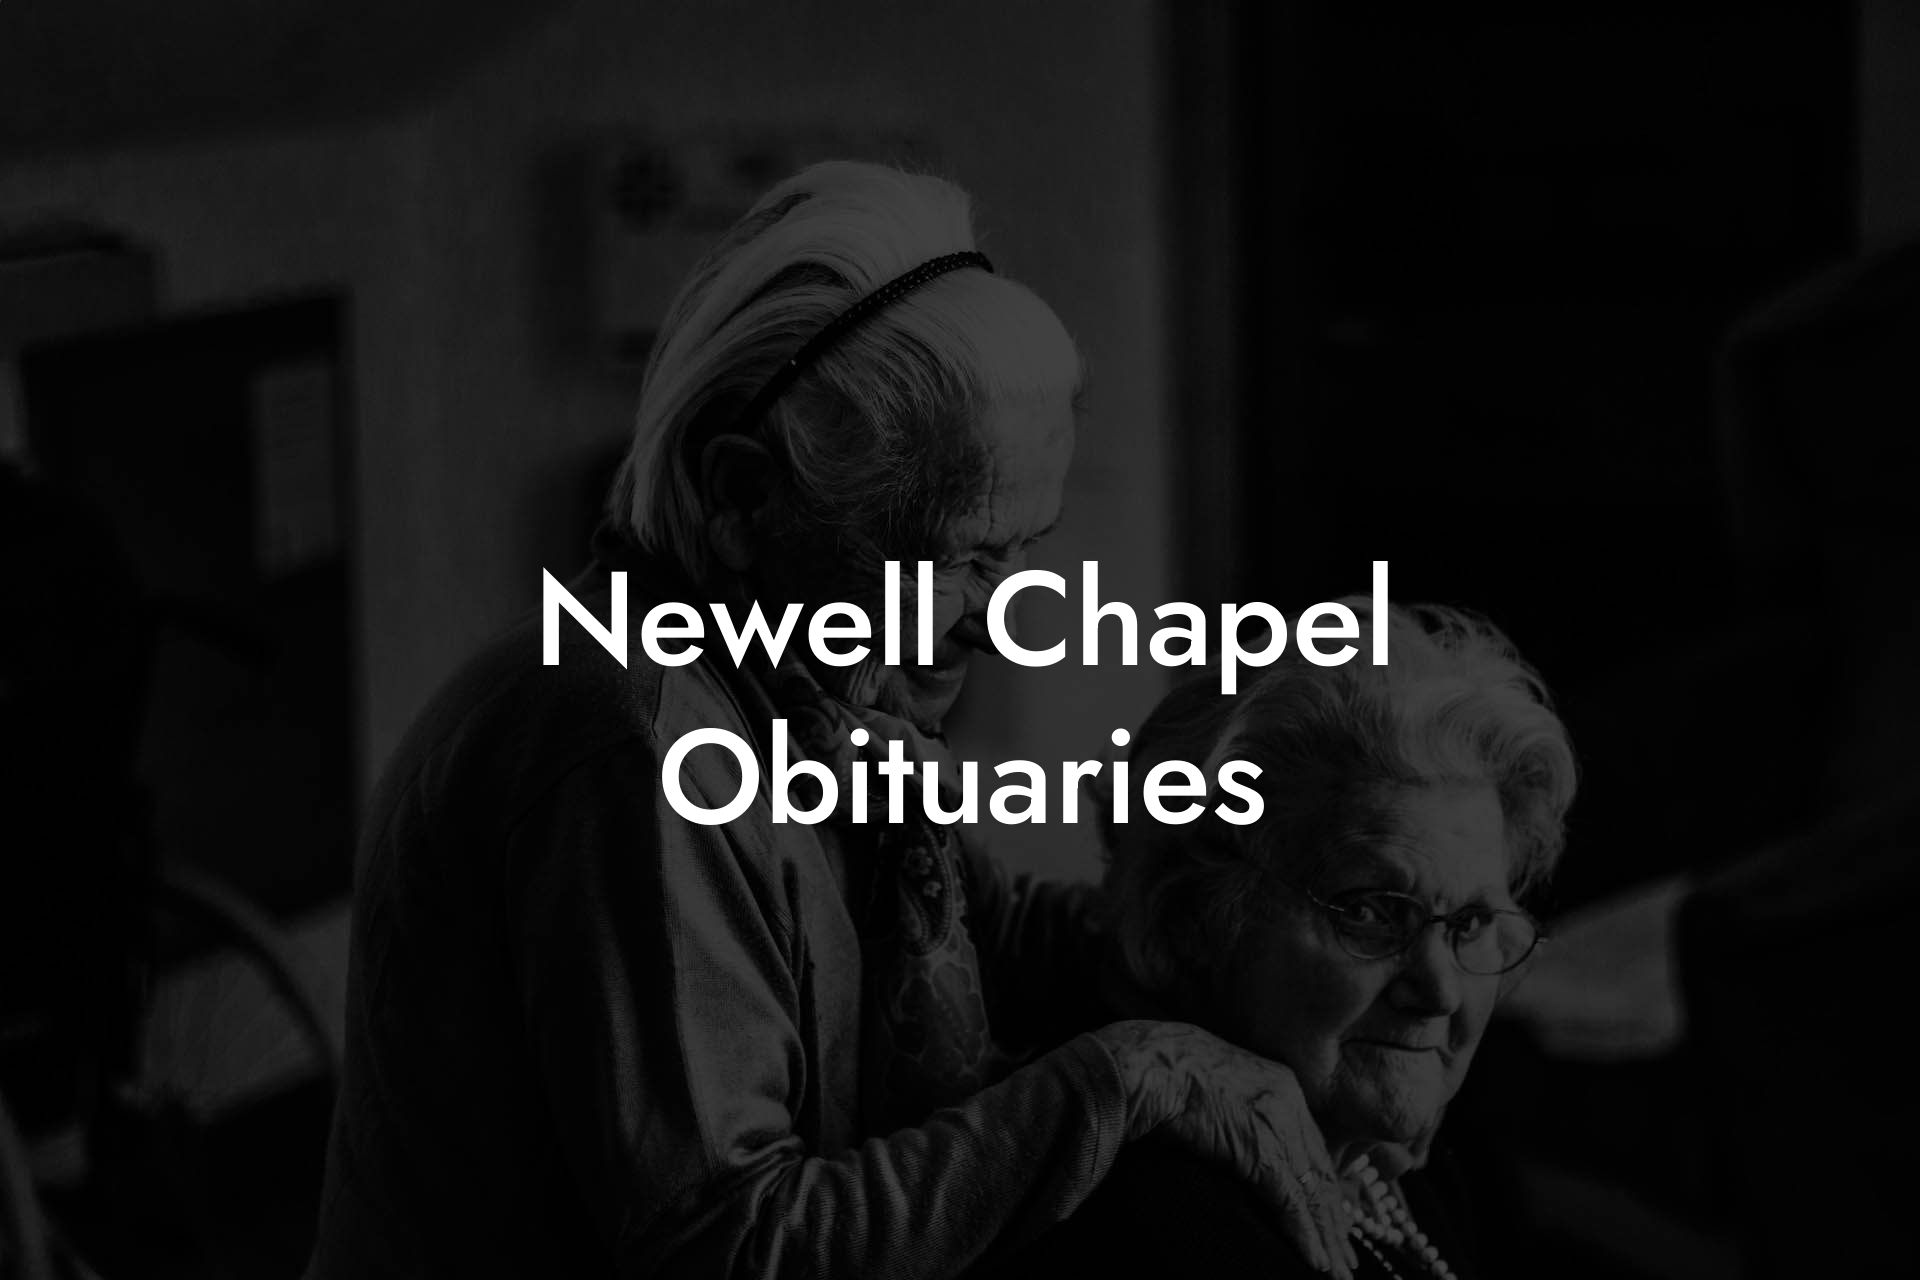 Newell Chapel Obituaries